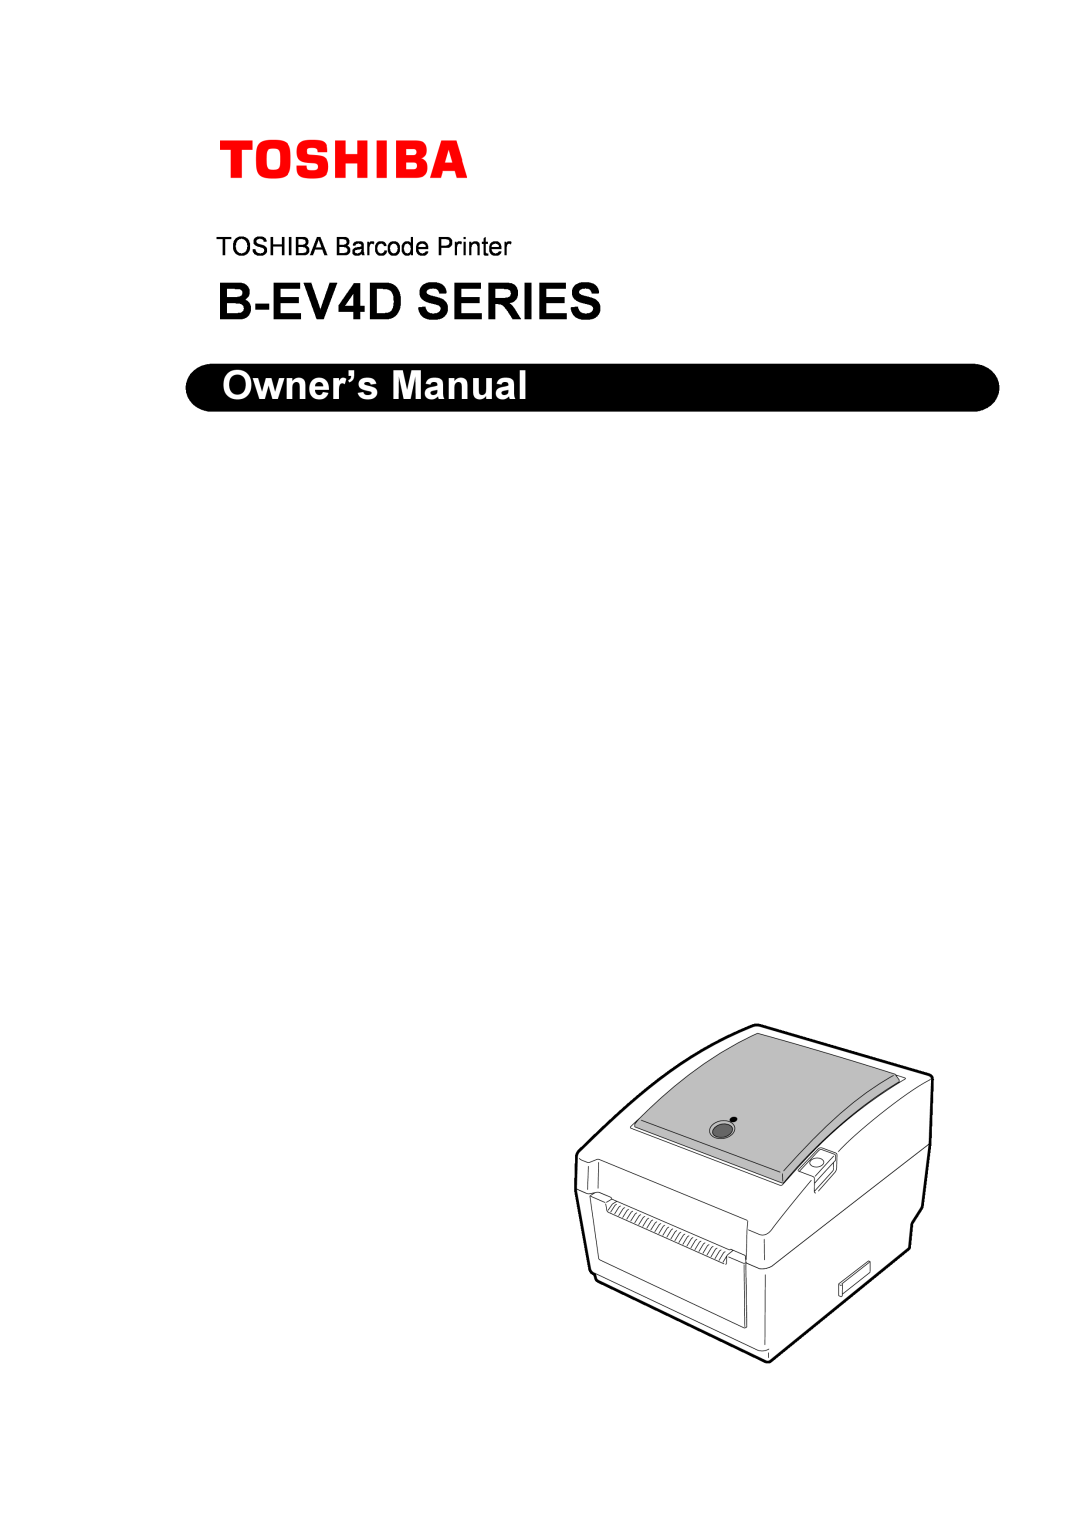 Toshiba B-EV4D SERIES, EO1-33088 owner manual Owner’s Manual, TOSHIBA Barcode Printer 